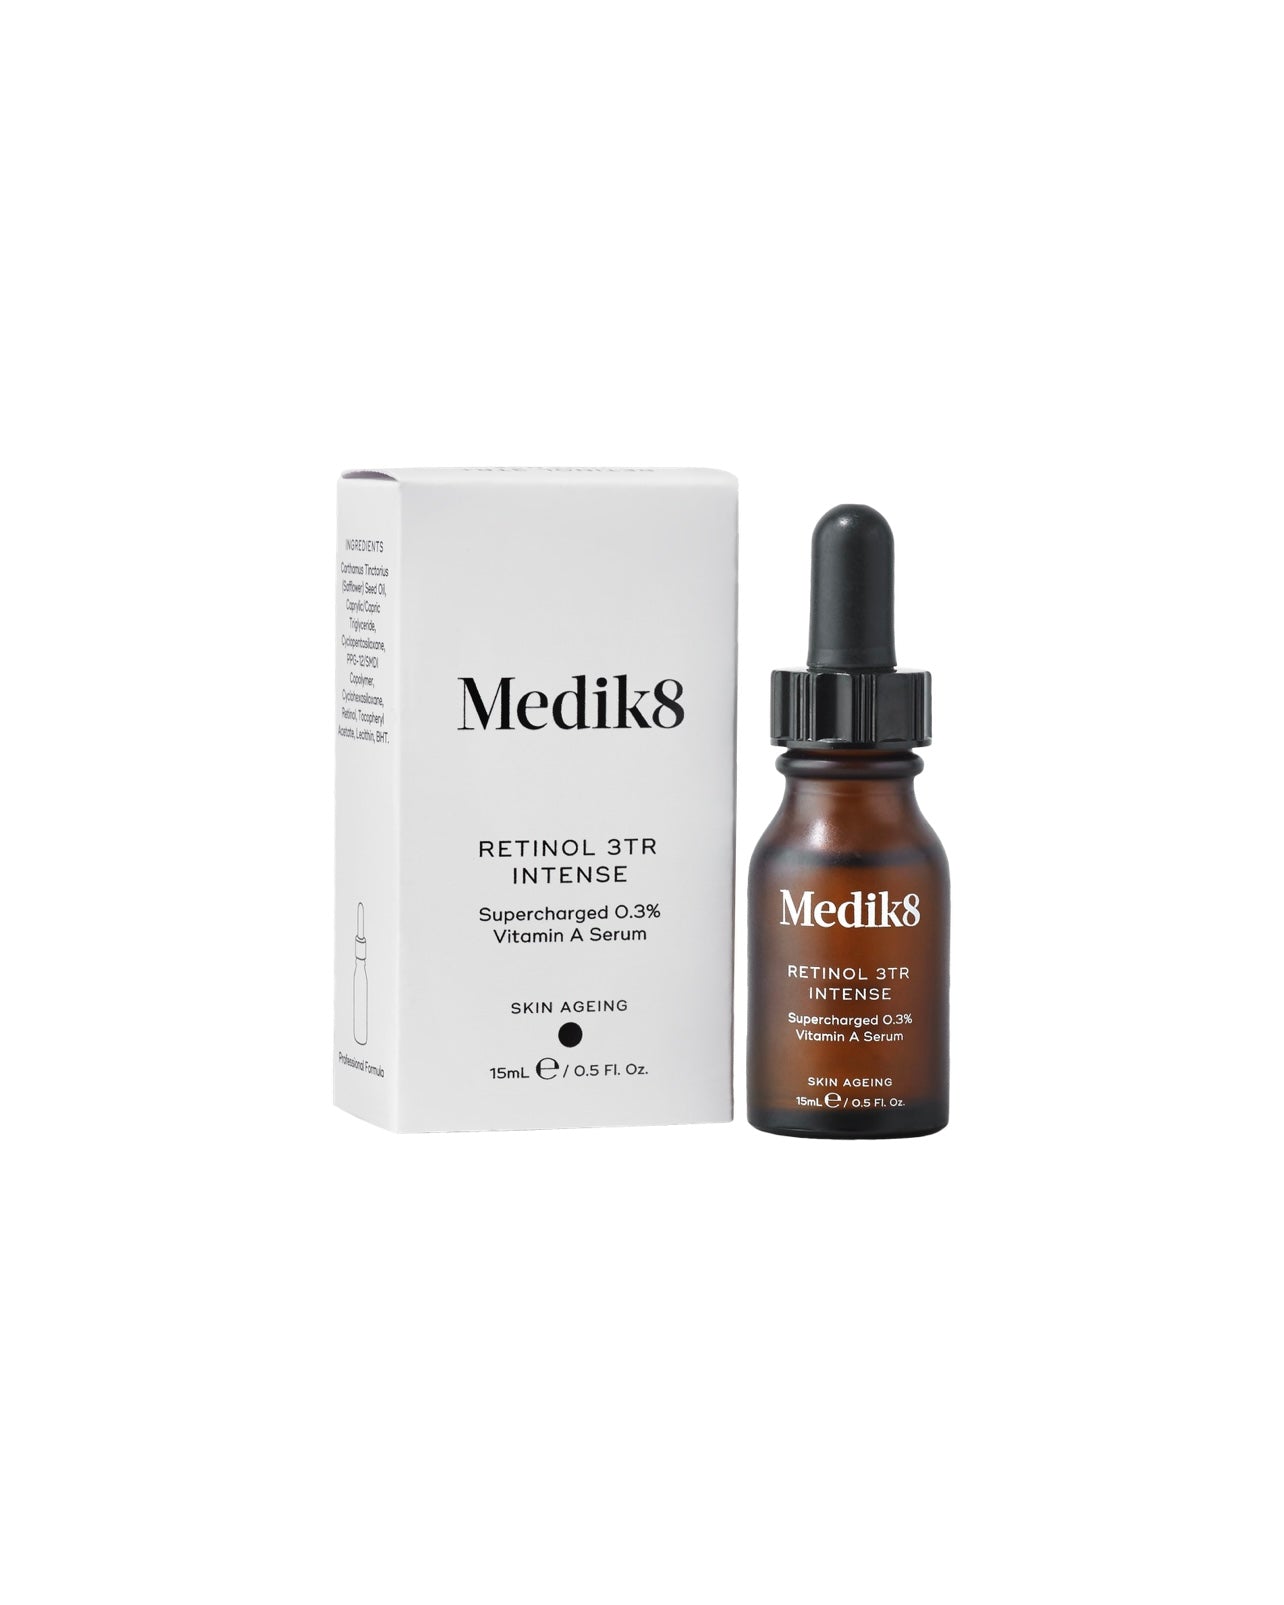 Medik8 Retinol 3TR Intense Supercharged 0.3% Vitamin A Serum 15ml